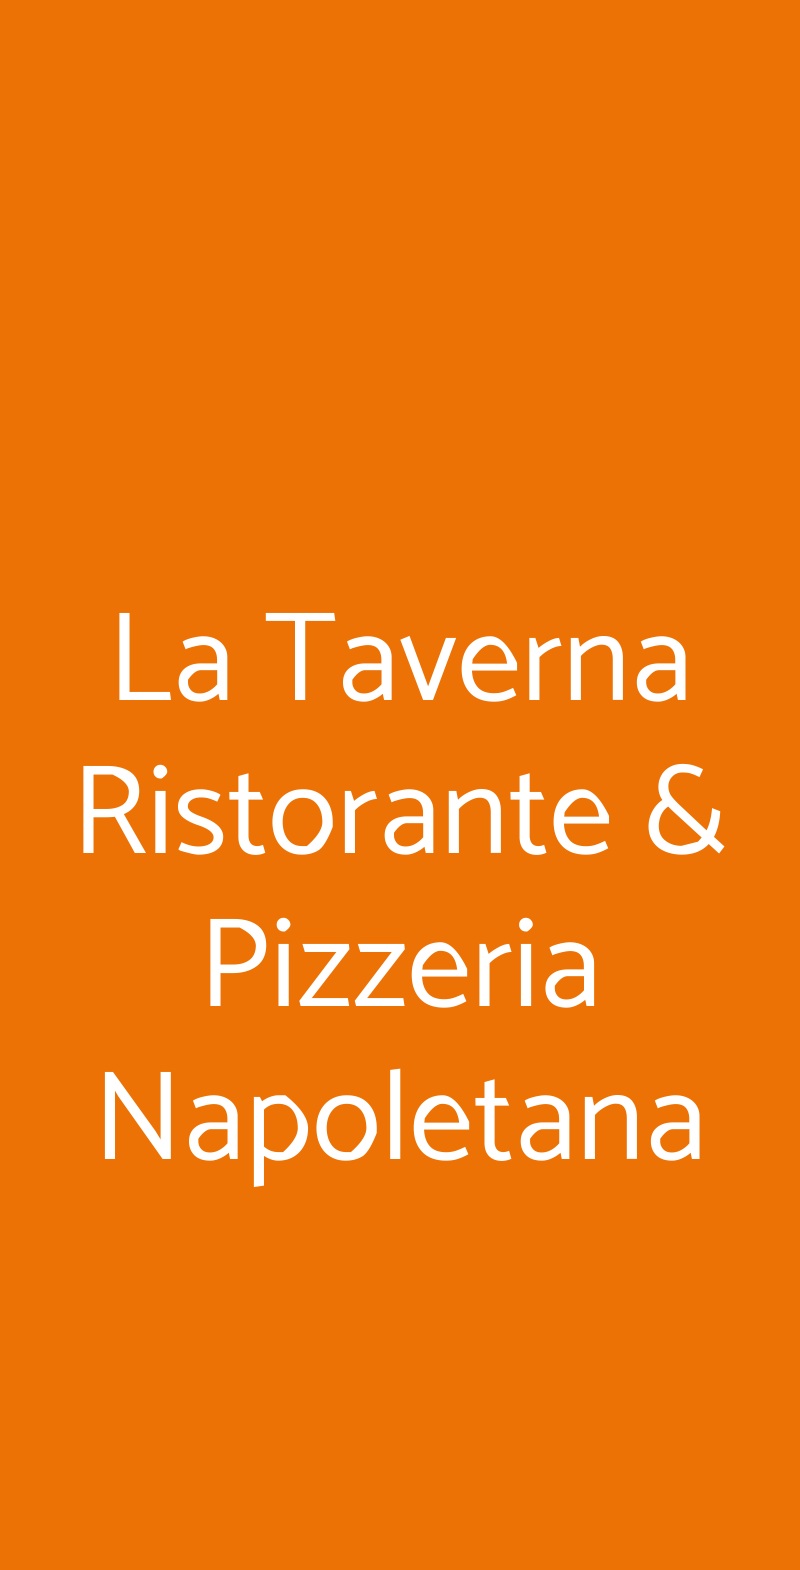 La Taverna Ristorante & Pizzeria Napoletana Milano menù 1 pagina